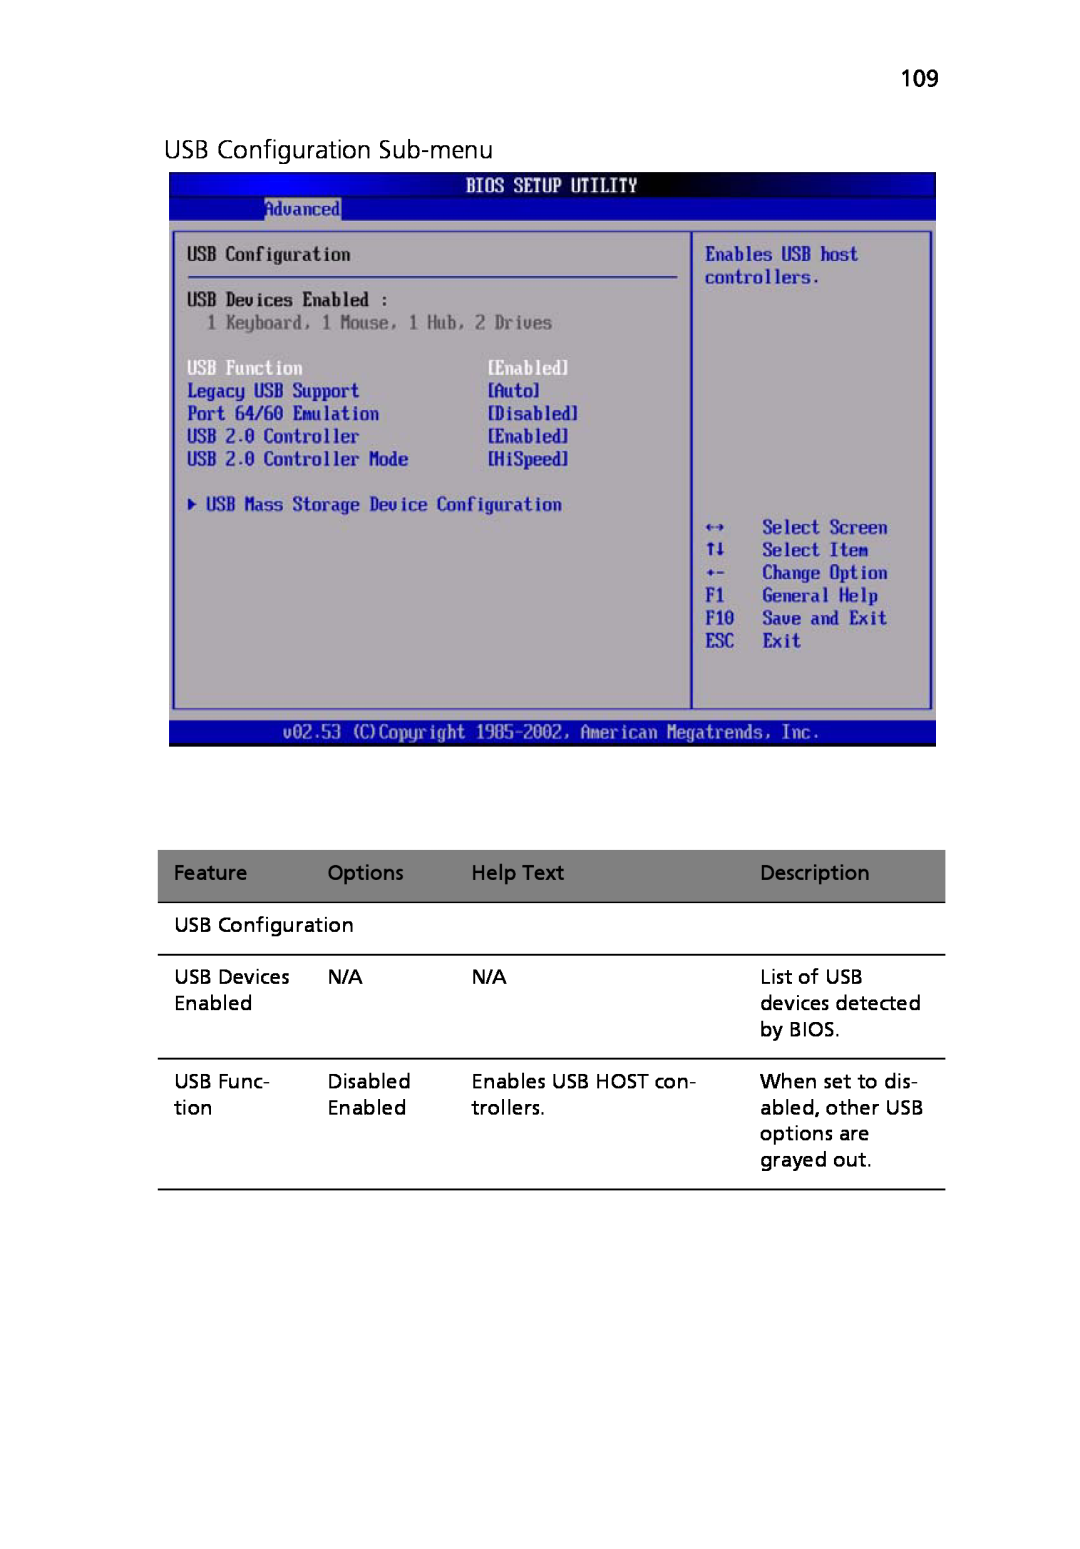 Acer Altos R710 manual USB Configuration Sub-menu, Feature, Options, Help Text, Description 